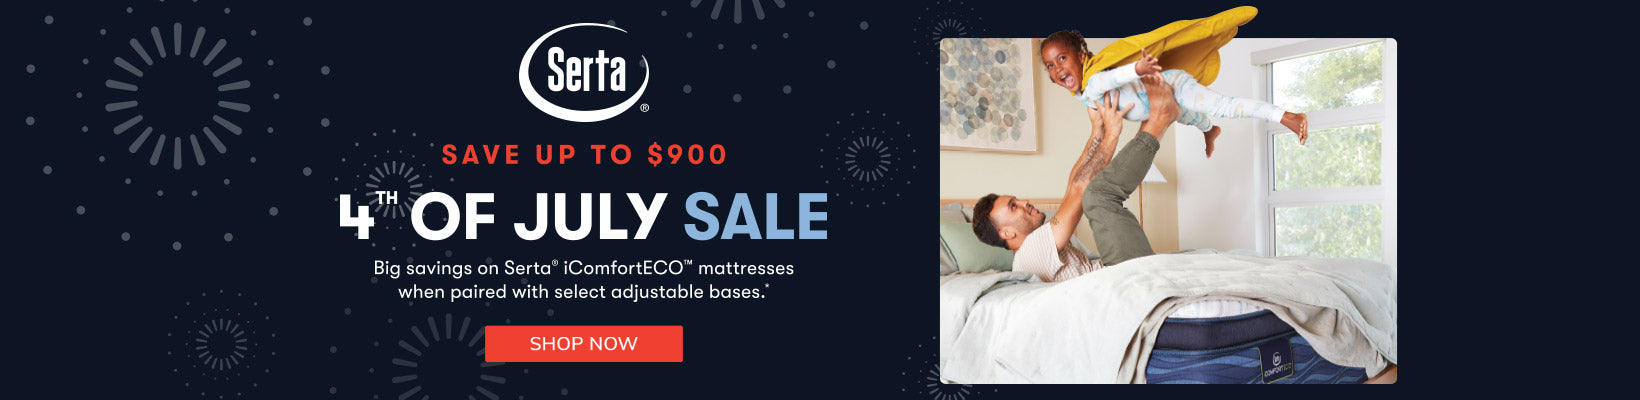 Serta 4th of July Sale - Save up to $900 on iComfort ECO Adjustable Mattress Sets